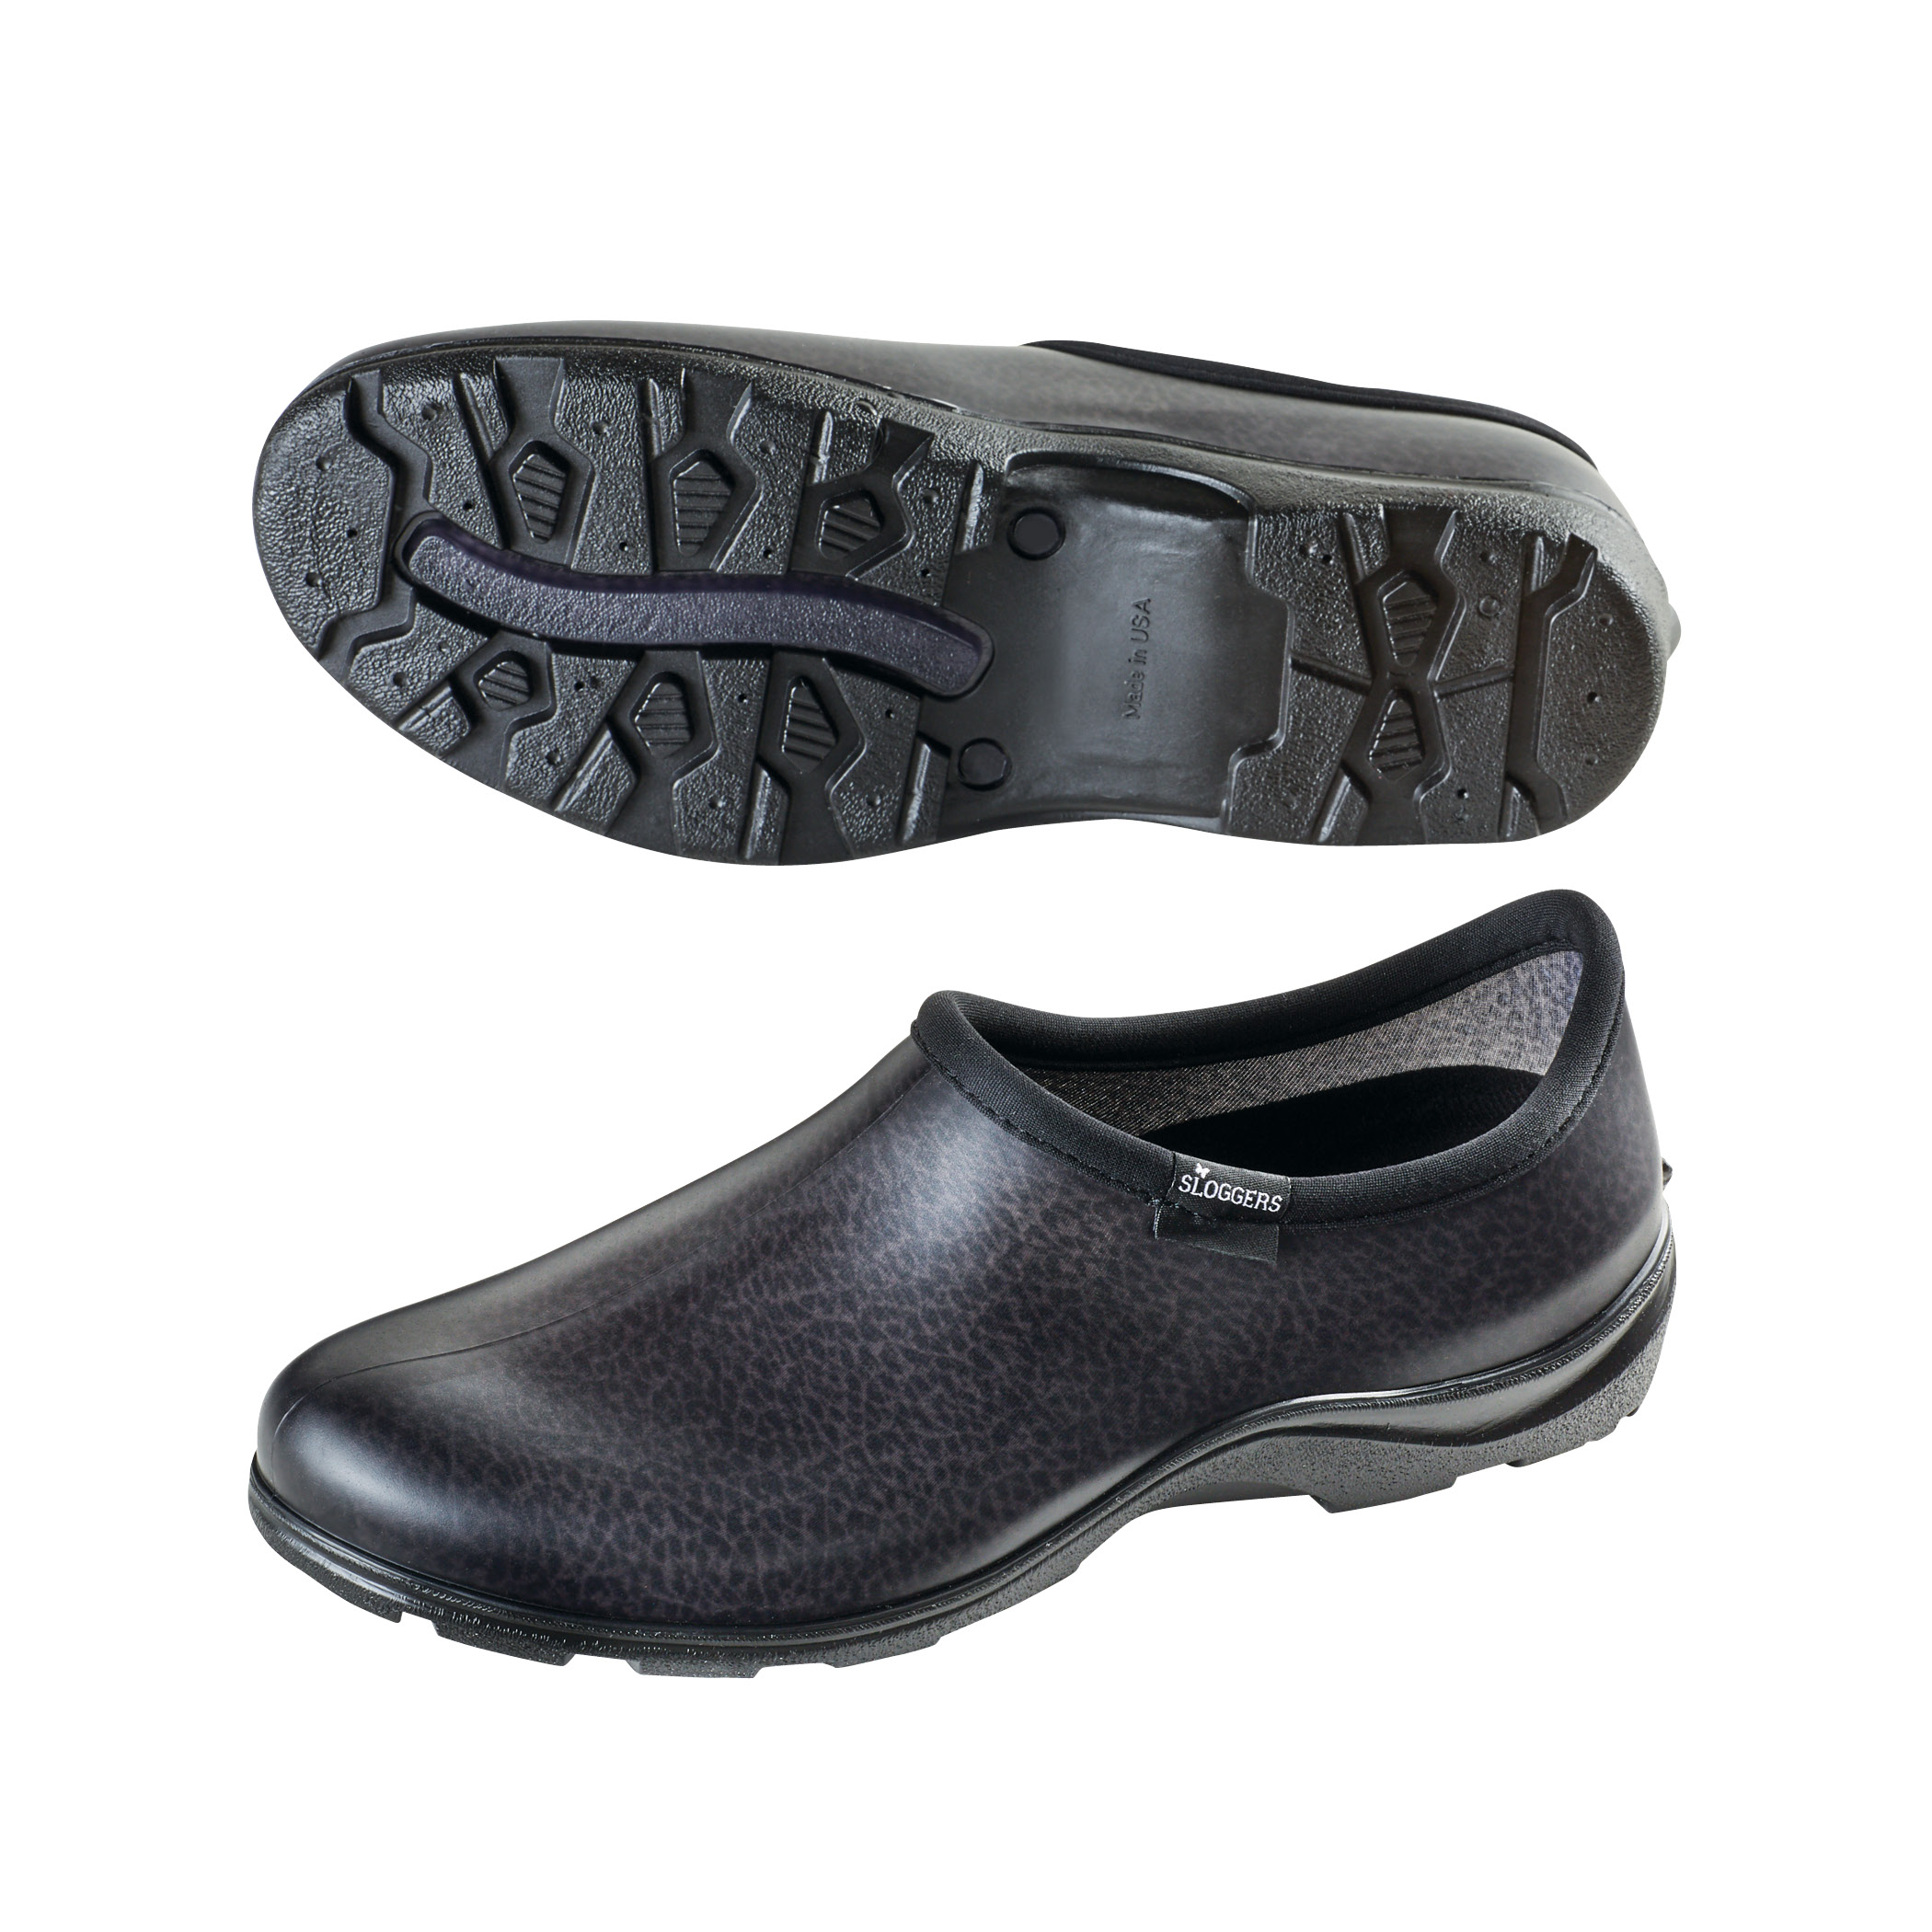 Sloggers 5301BK12 Men's Rain and Garden Shoe, Black, Size 12 - image 2 of 2